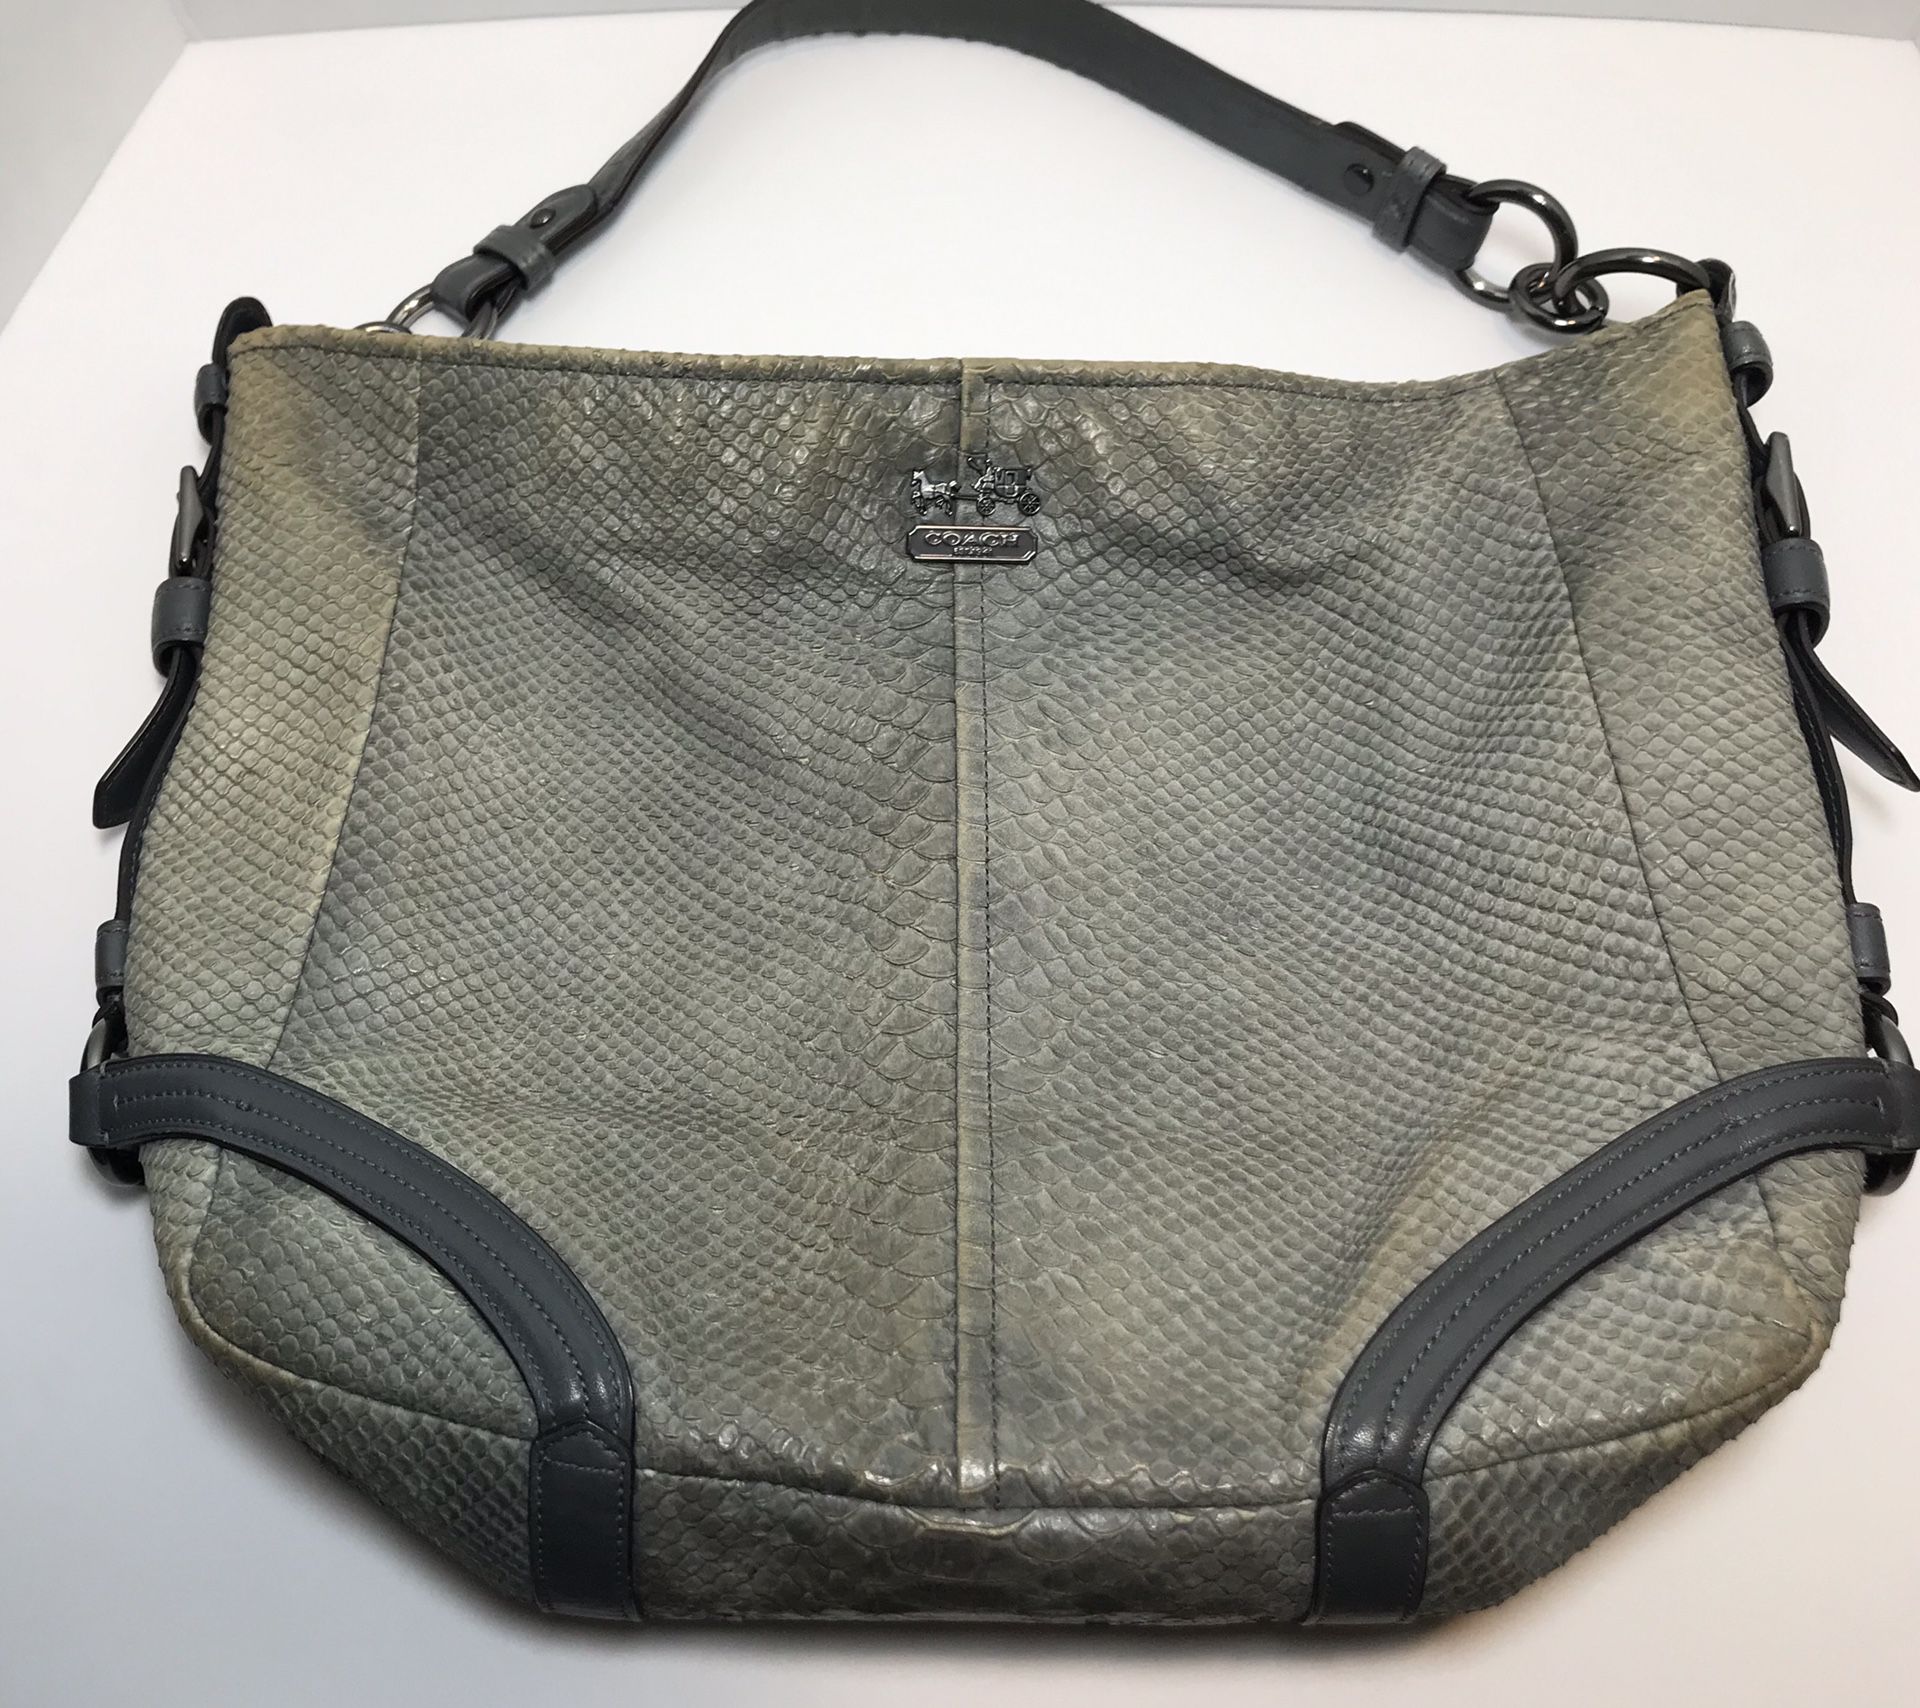 Vintage Coach snakeskin hobo bag in grey